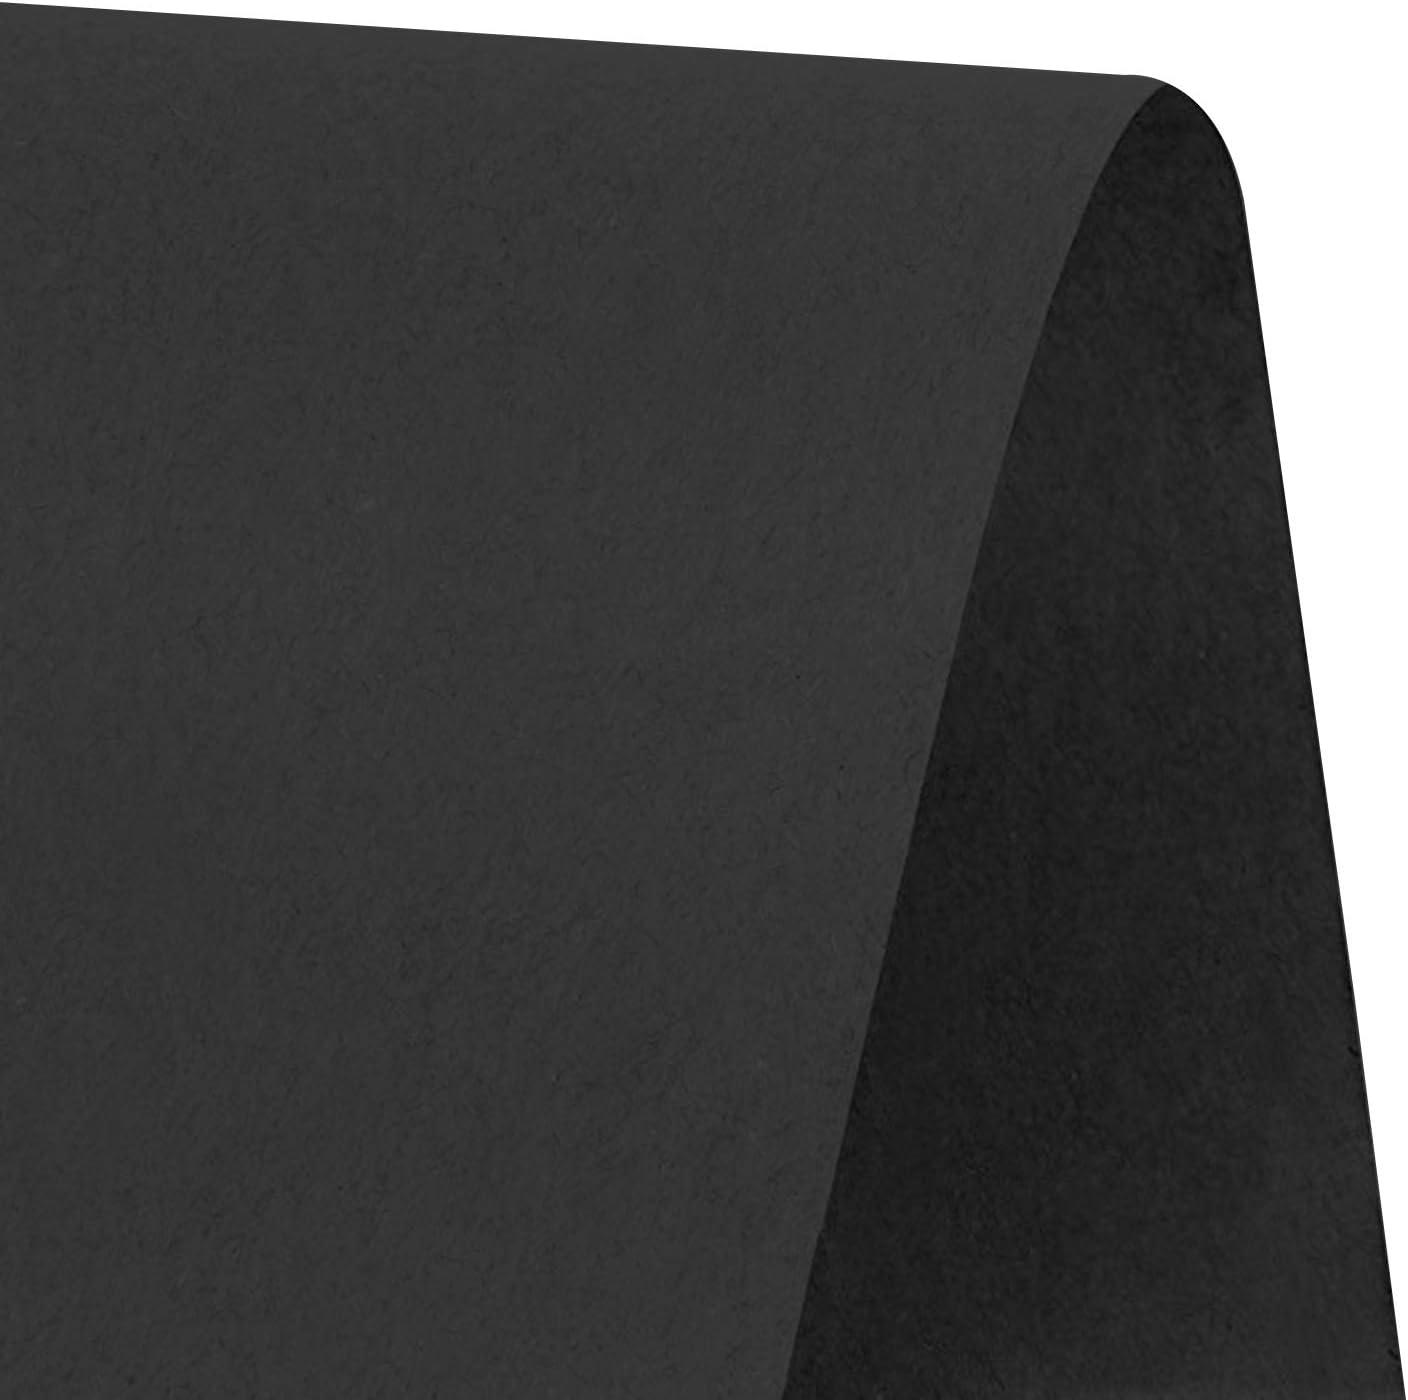 Black Wrapping Paper 15 X 390, Craft Kraft Paper Black